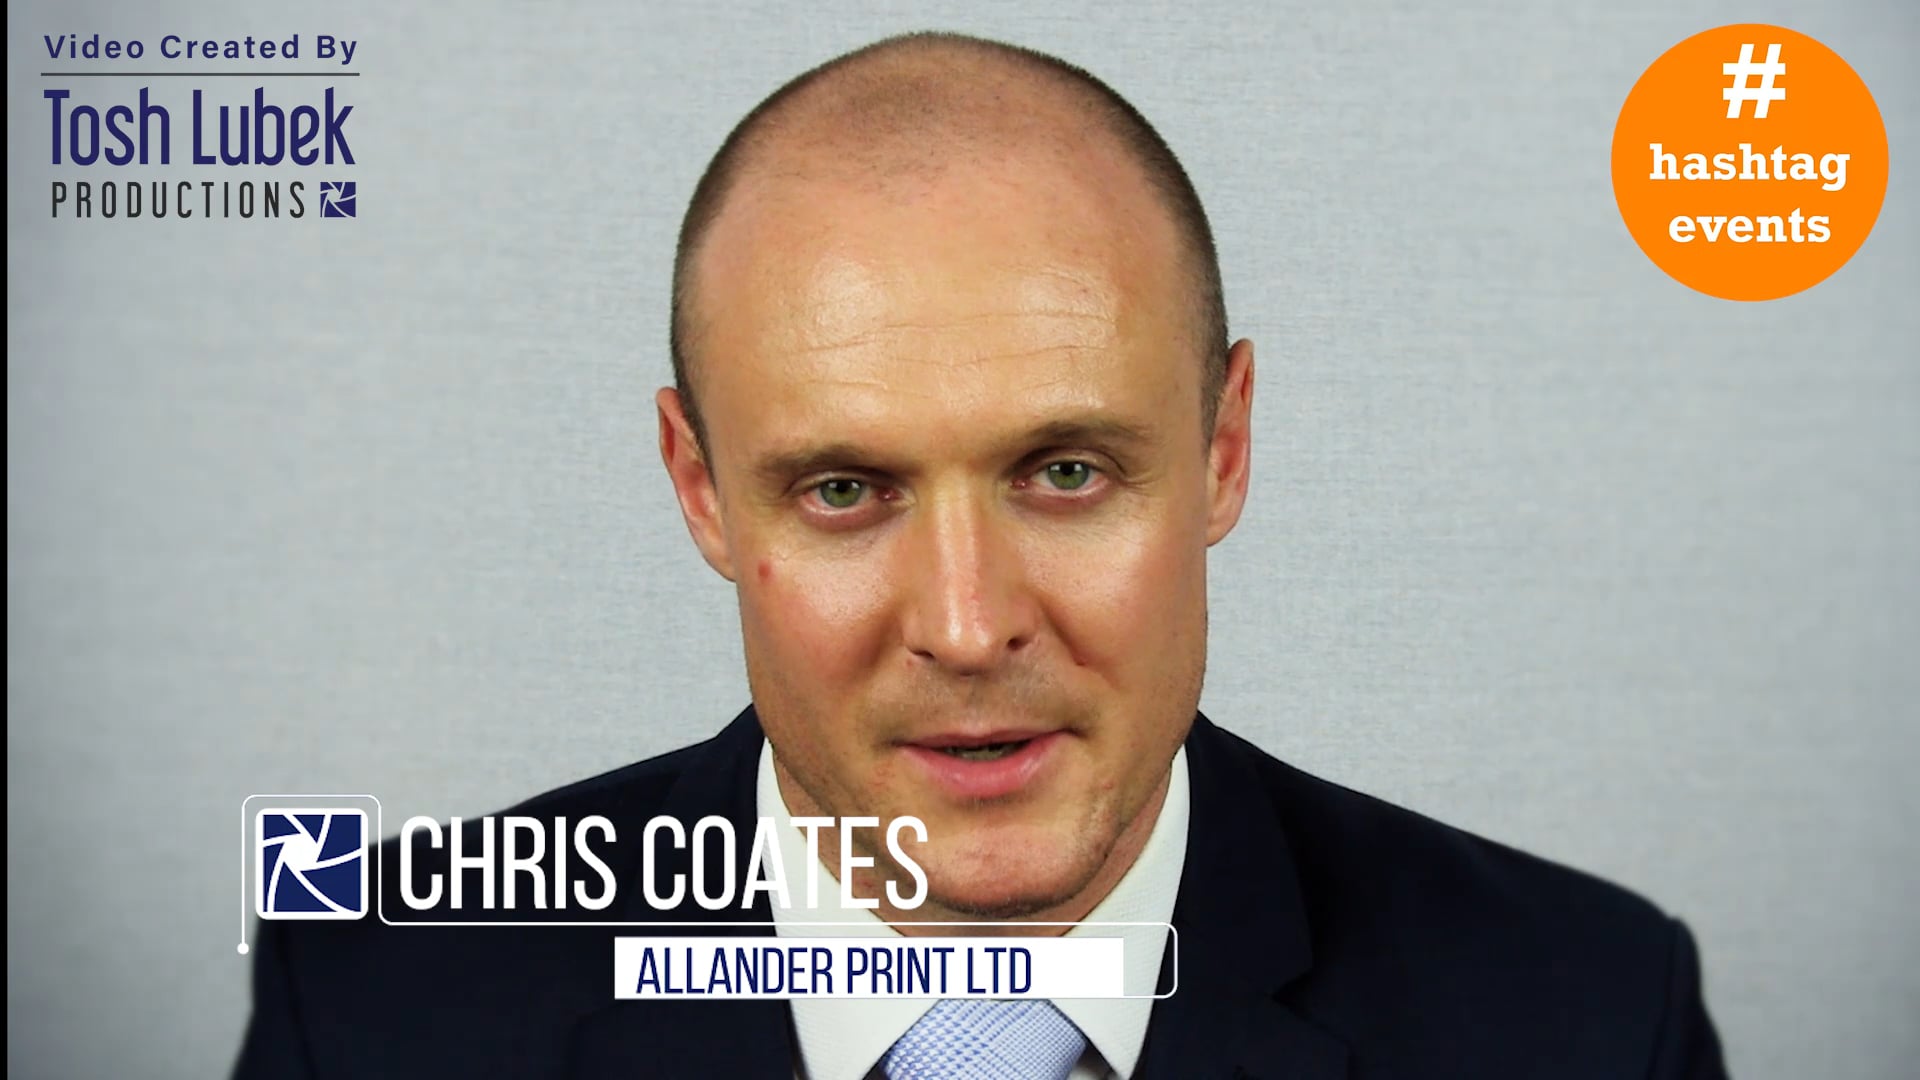 Chris Coates Video 2 on Vimeo